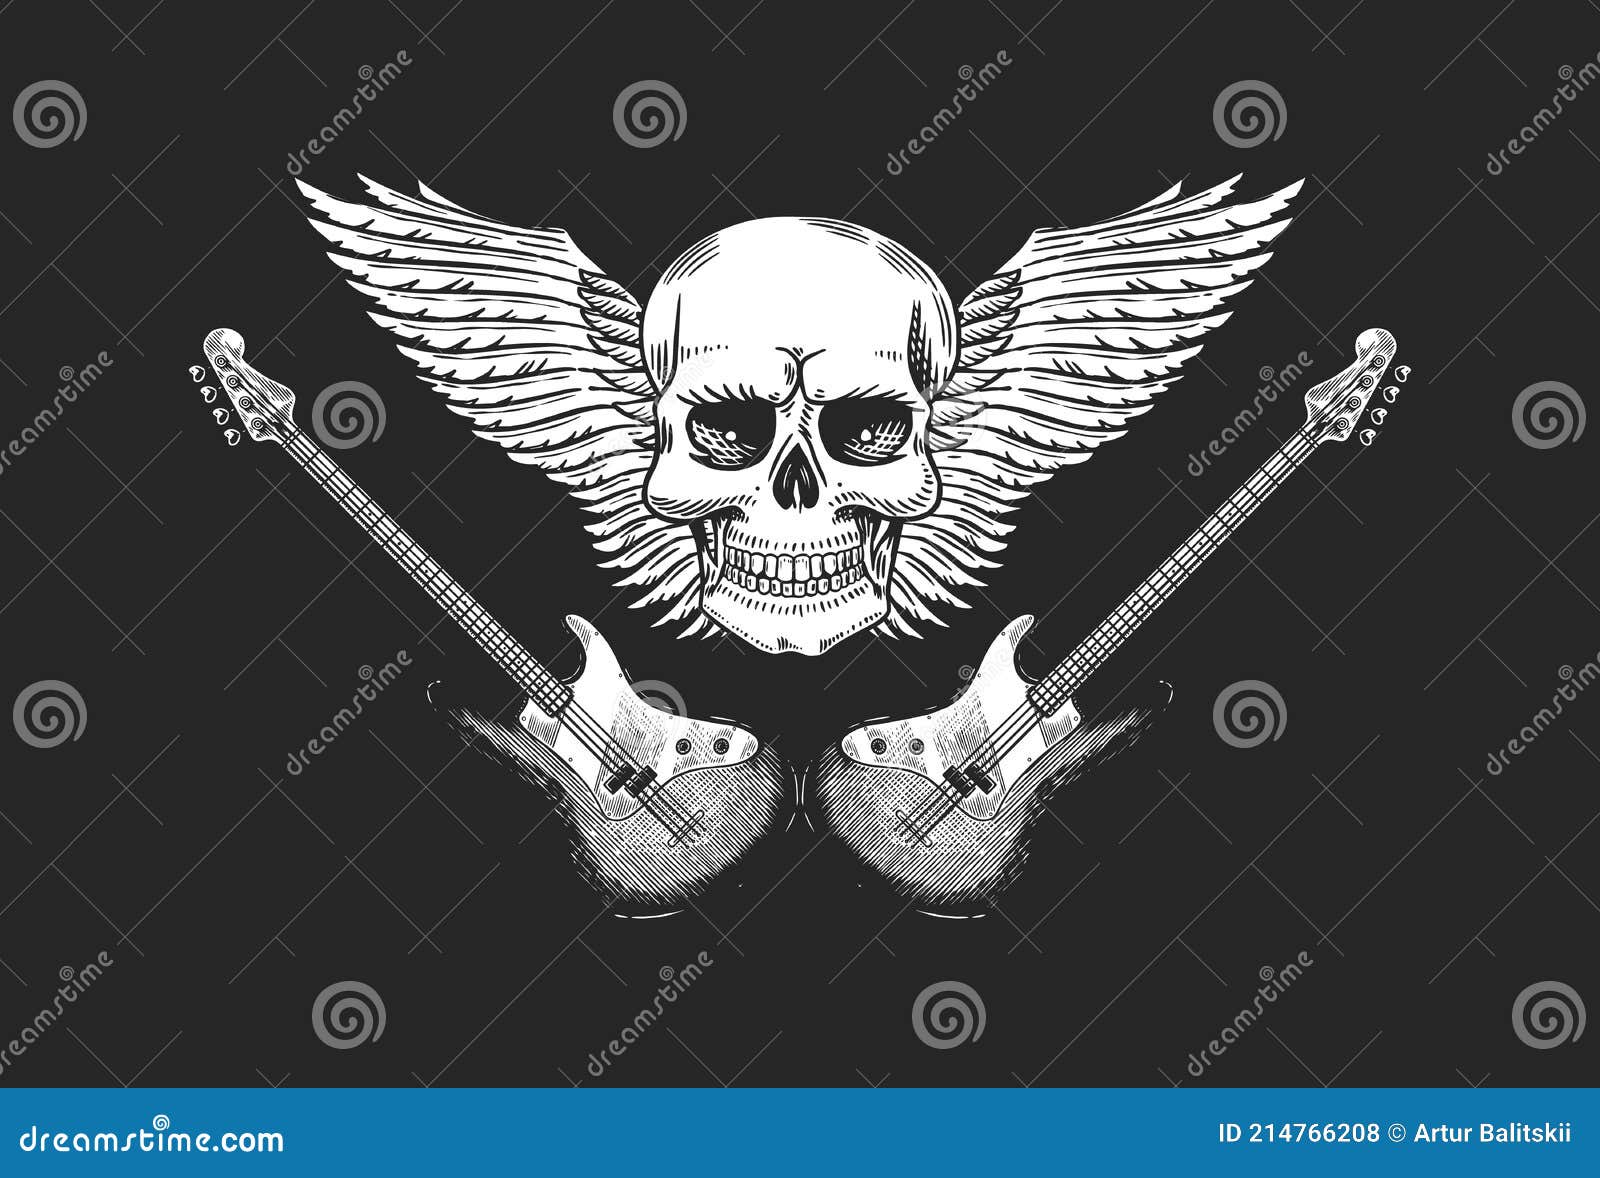 GREYLINE TATTOO on Twitter skull guitar tattoo realizado por Pablo  Hernandez IG gt pablohernandeztattoo With RadiantColors love  lovetattoos ink worldtattoo tattooartist tattoostudios  radiantcolorsink cheyennetattooequipment 